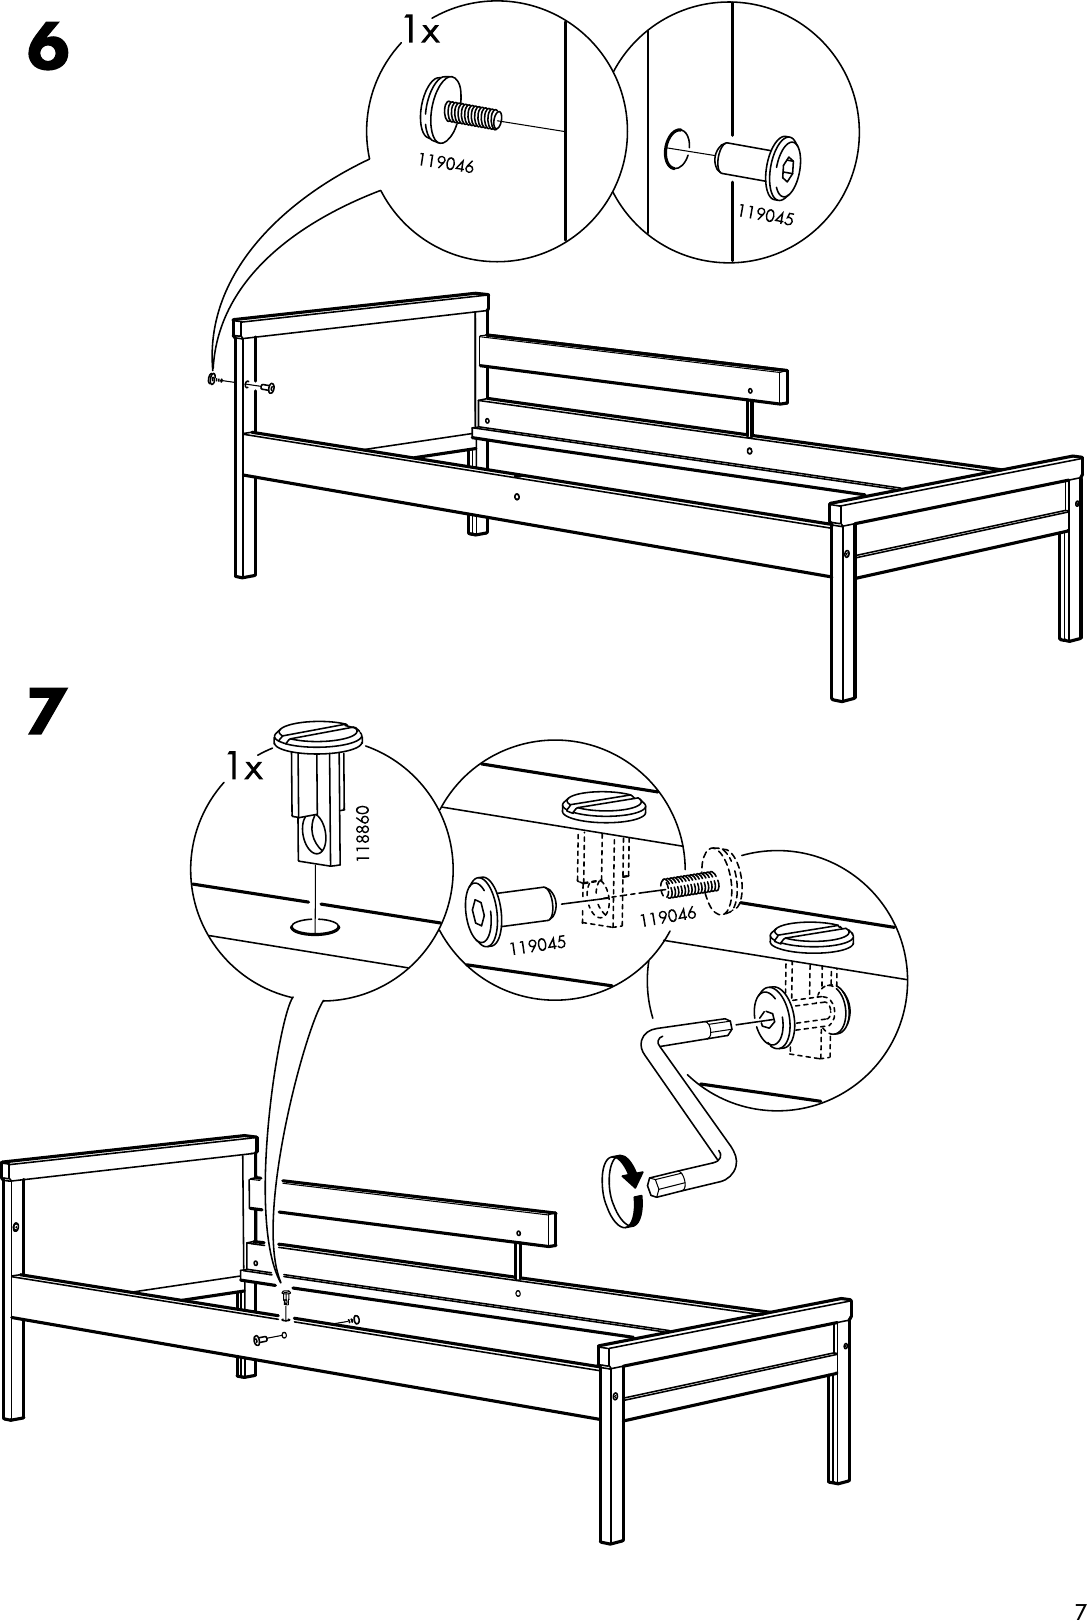 Page 7 of 8 - Ikea Ikea-Sniglar-Bed-Frame-W-Guide-Rail-Assembly-Instruction